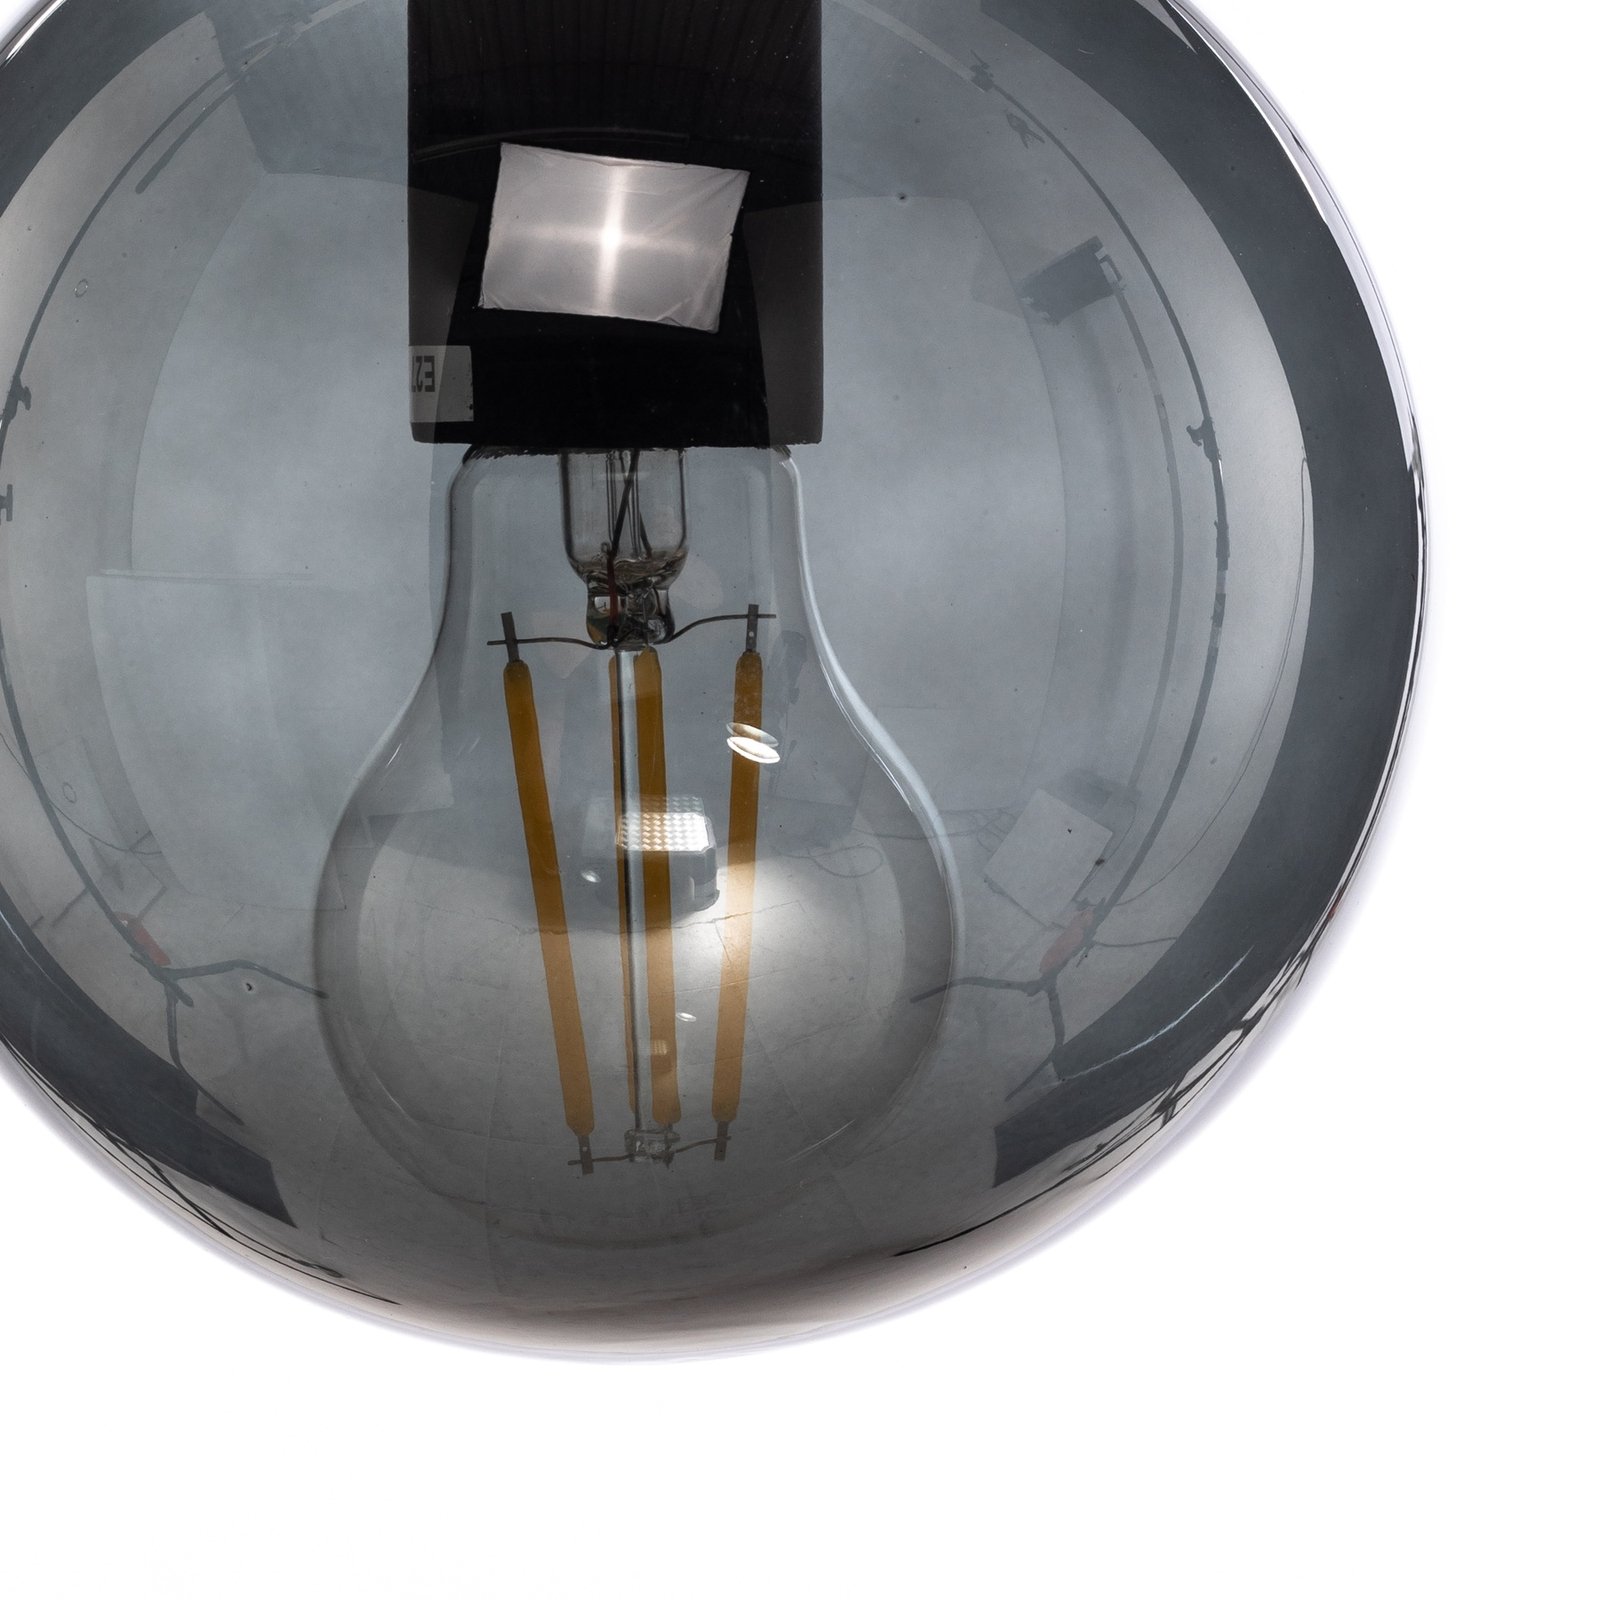 Hanglamp Efe 2155, kap van rookglas, Ø15cm